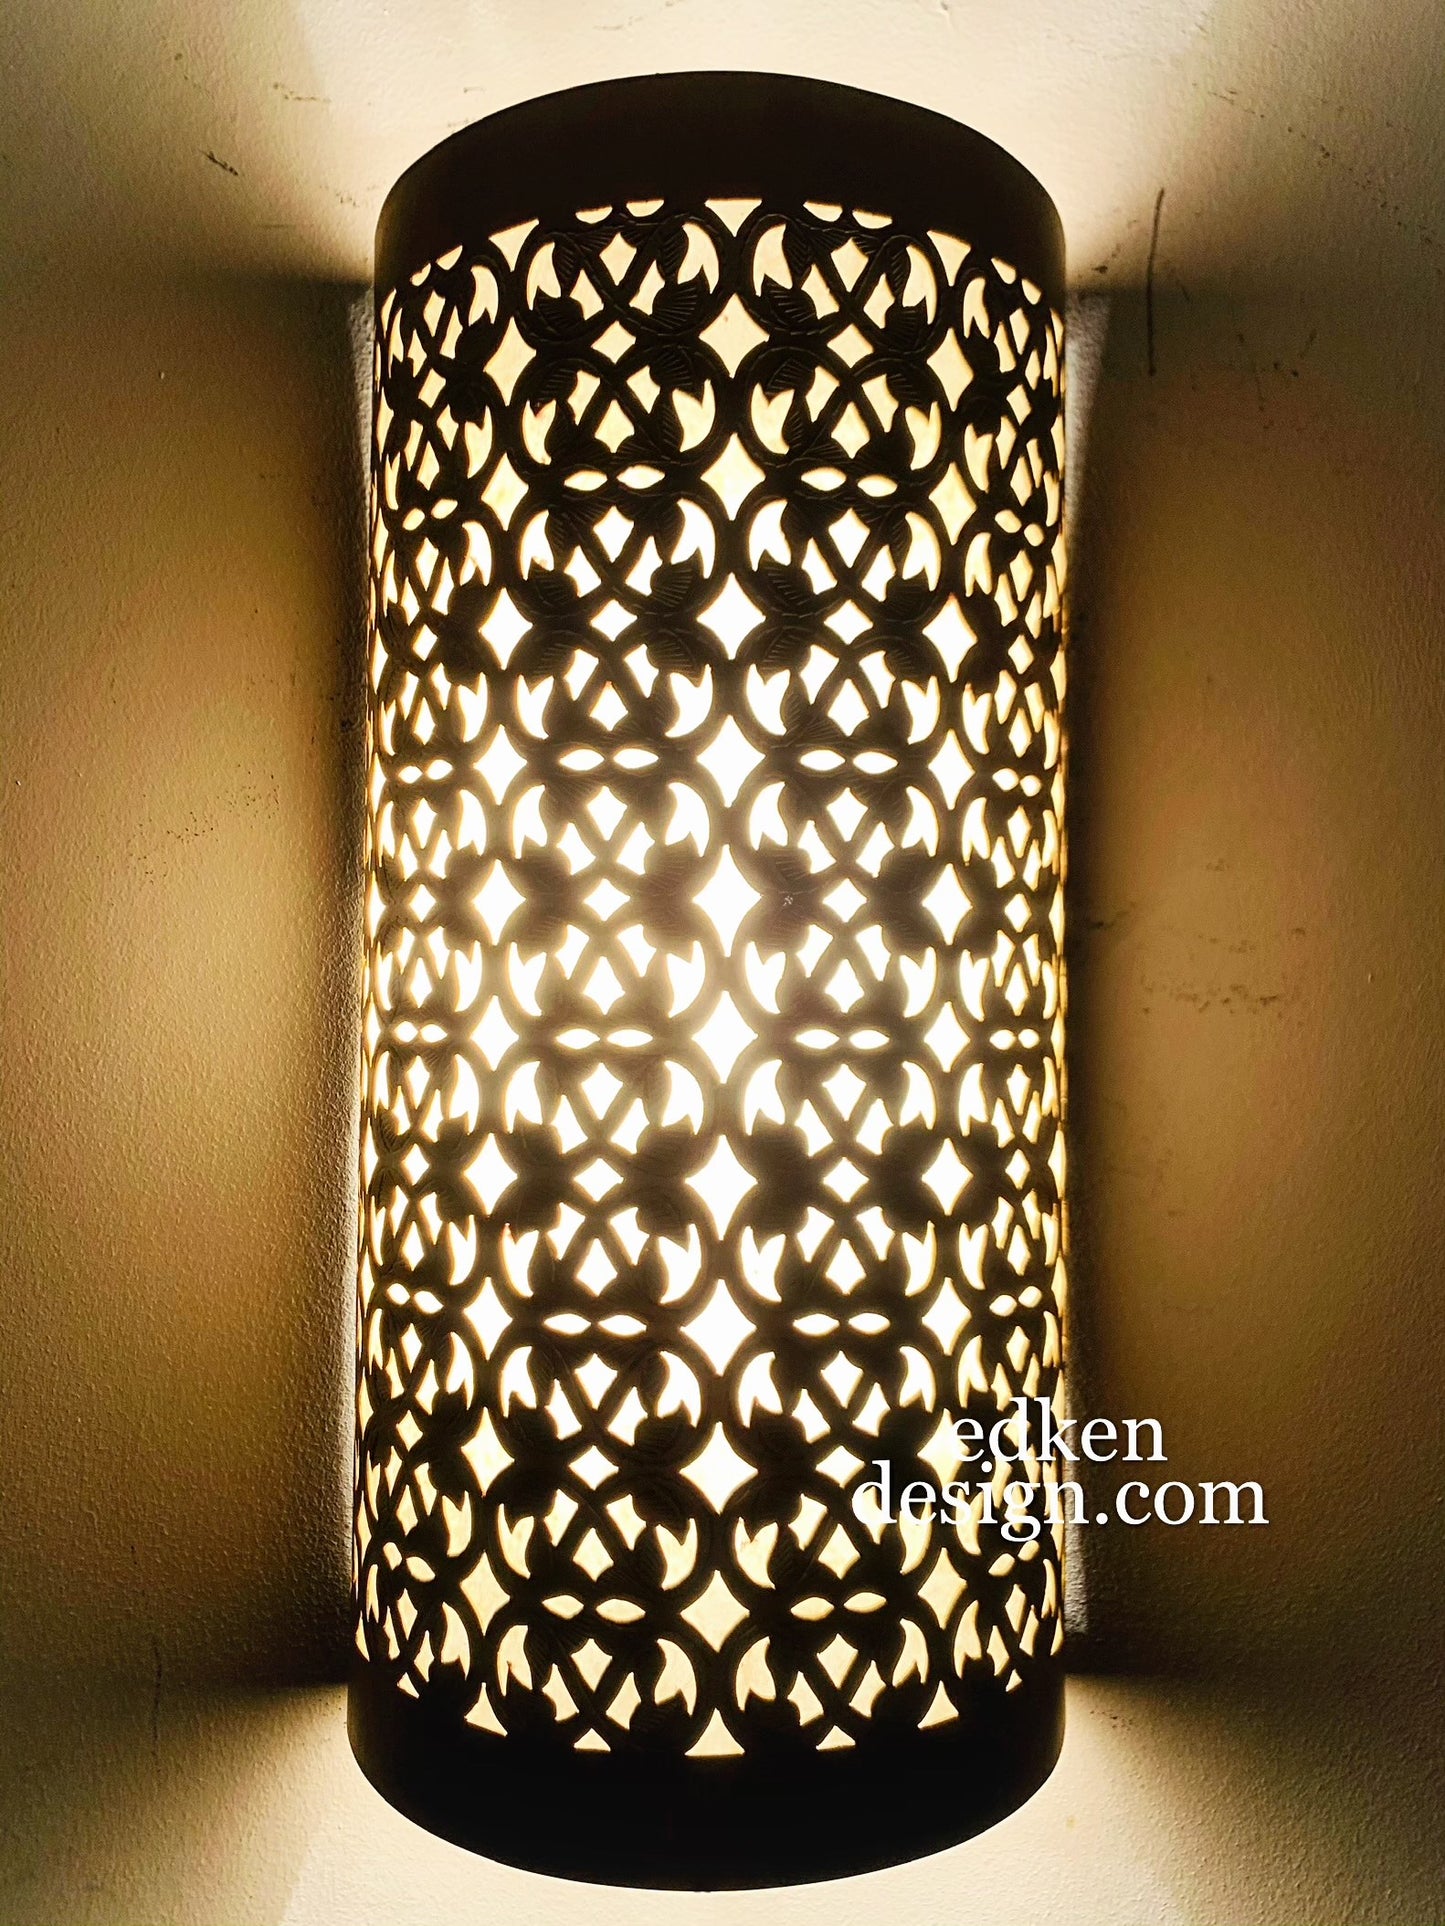 EDKEN LIGHTS - Moroccan Wall Lamps Sconce Fixture Morocco Wall Lights Handmade Vintage Home Decor